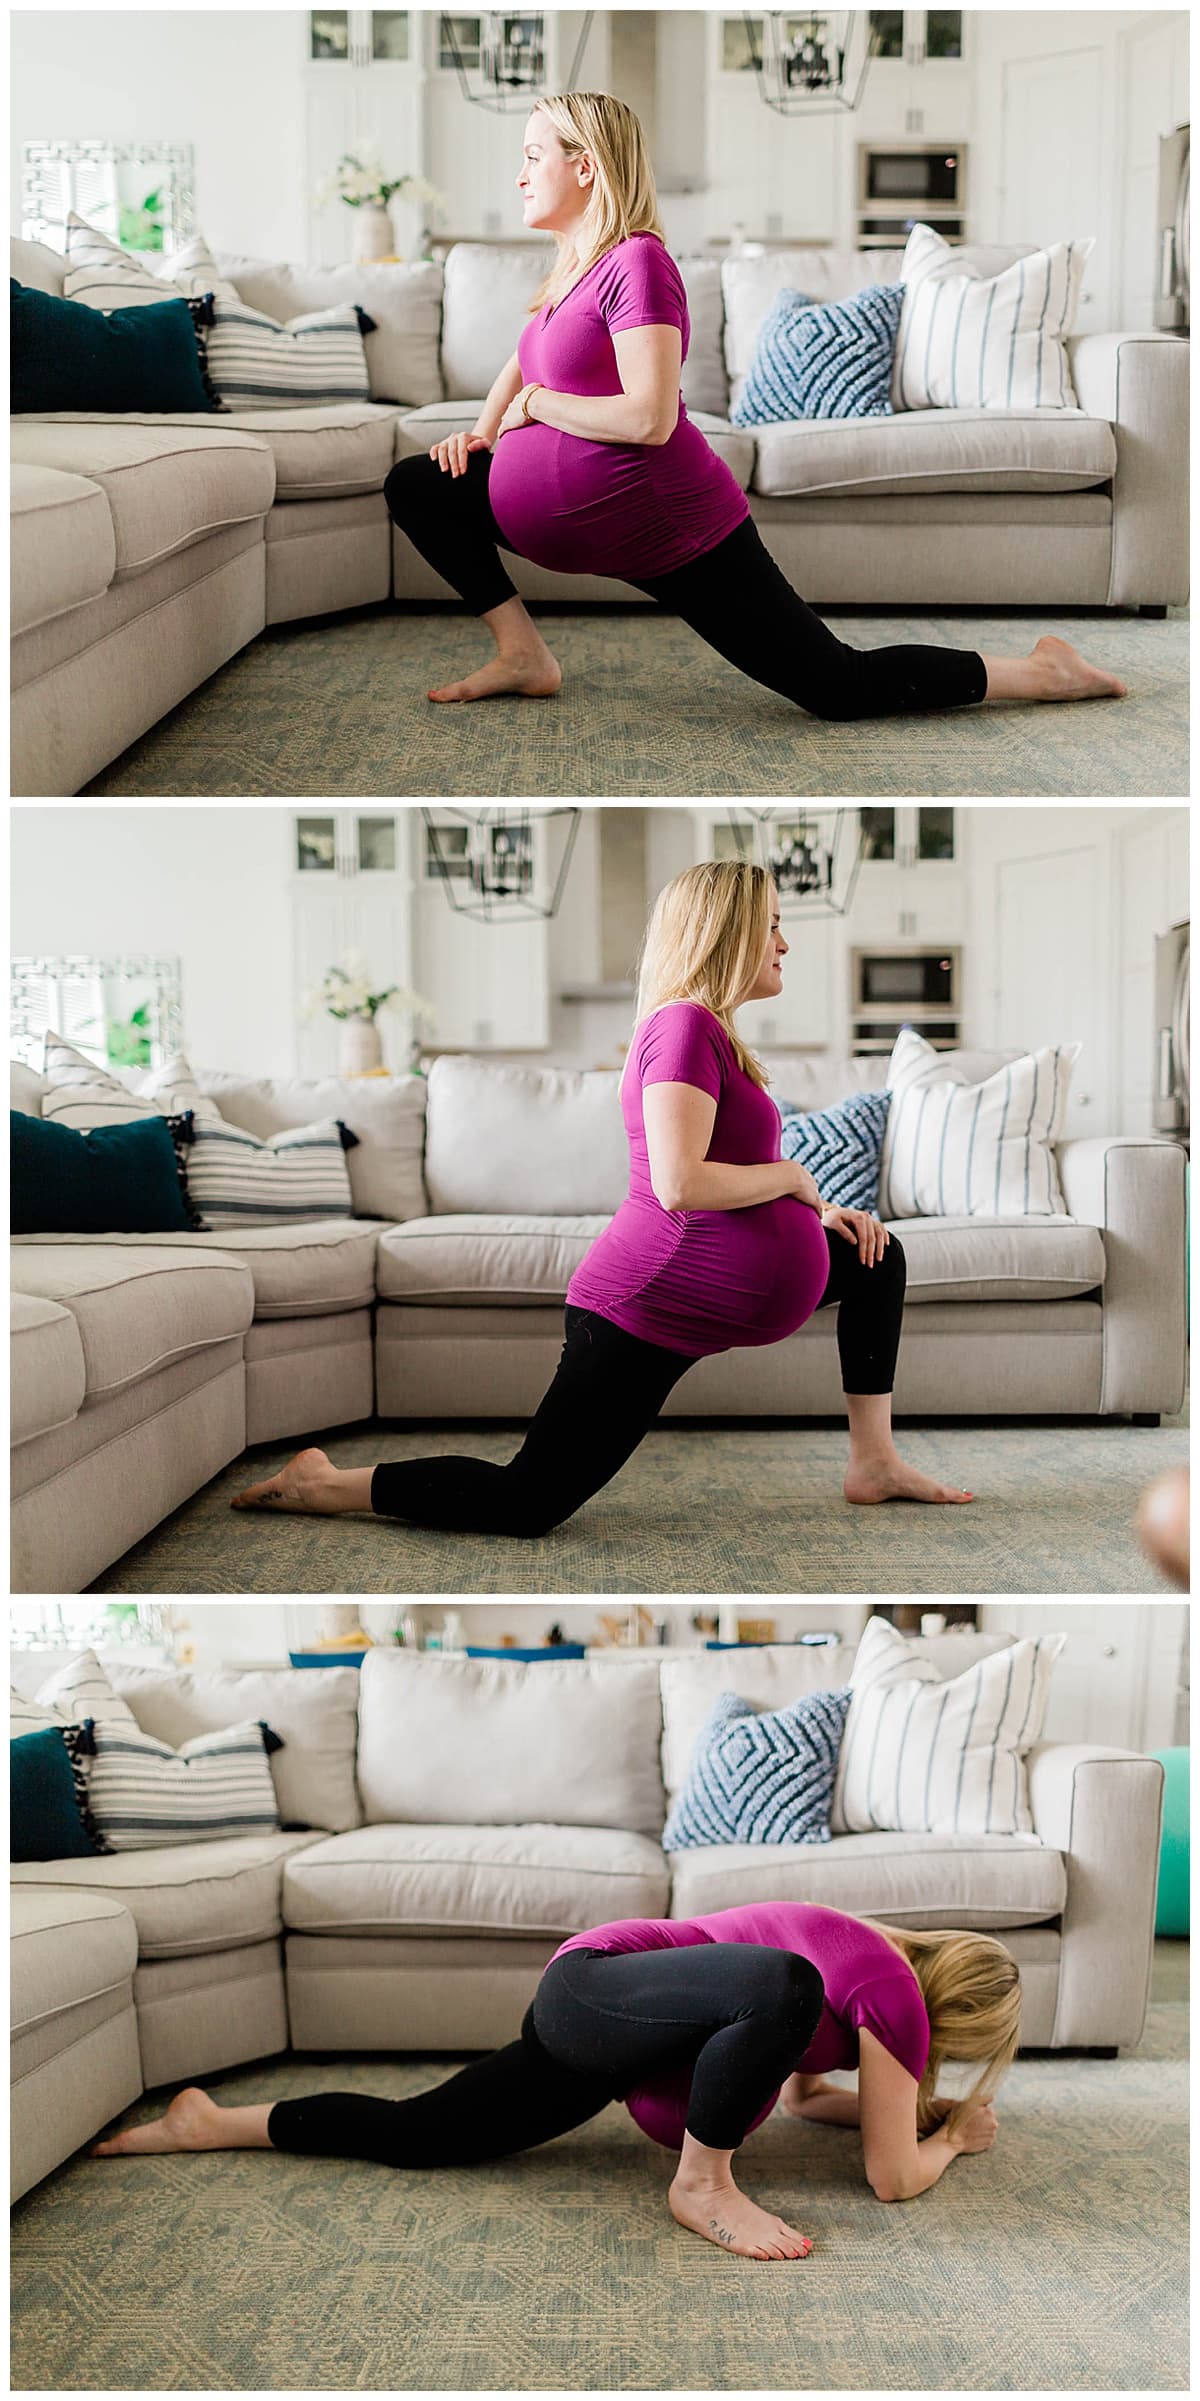 A pregnant woman doing Hip Flexor Stretches.